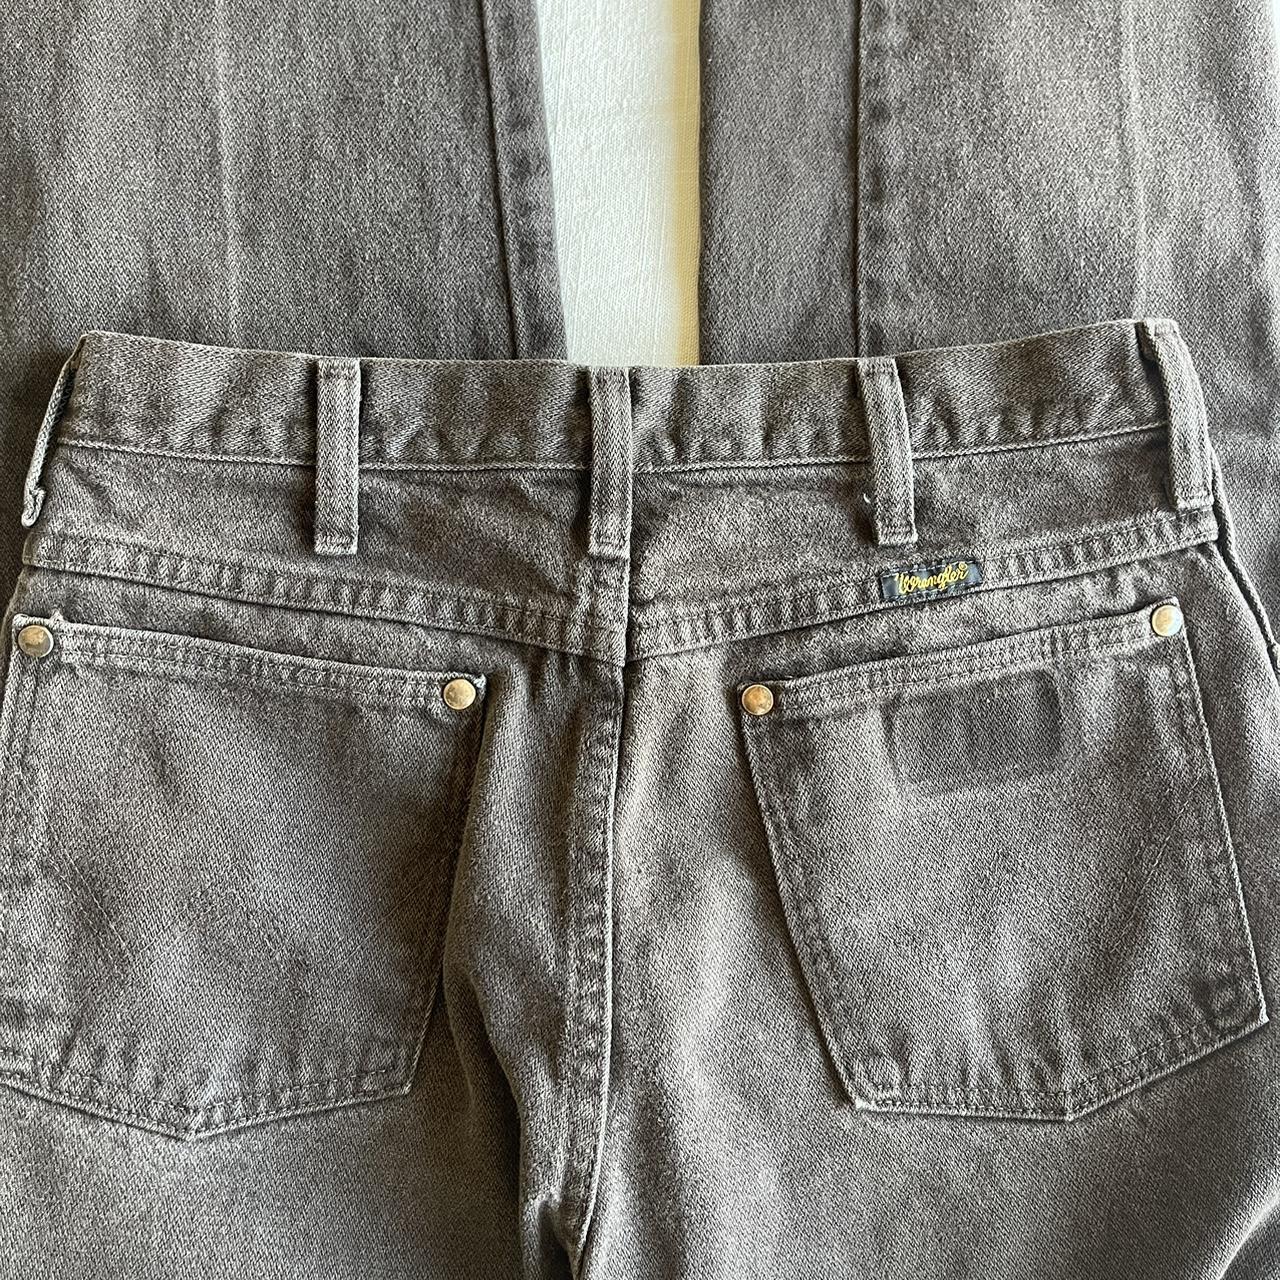 Vintage brown wrangler jeans Great condition, no... - Depop